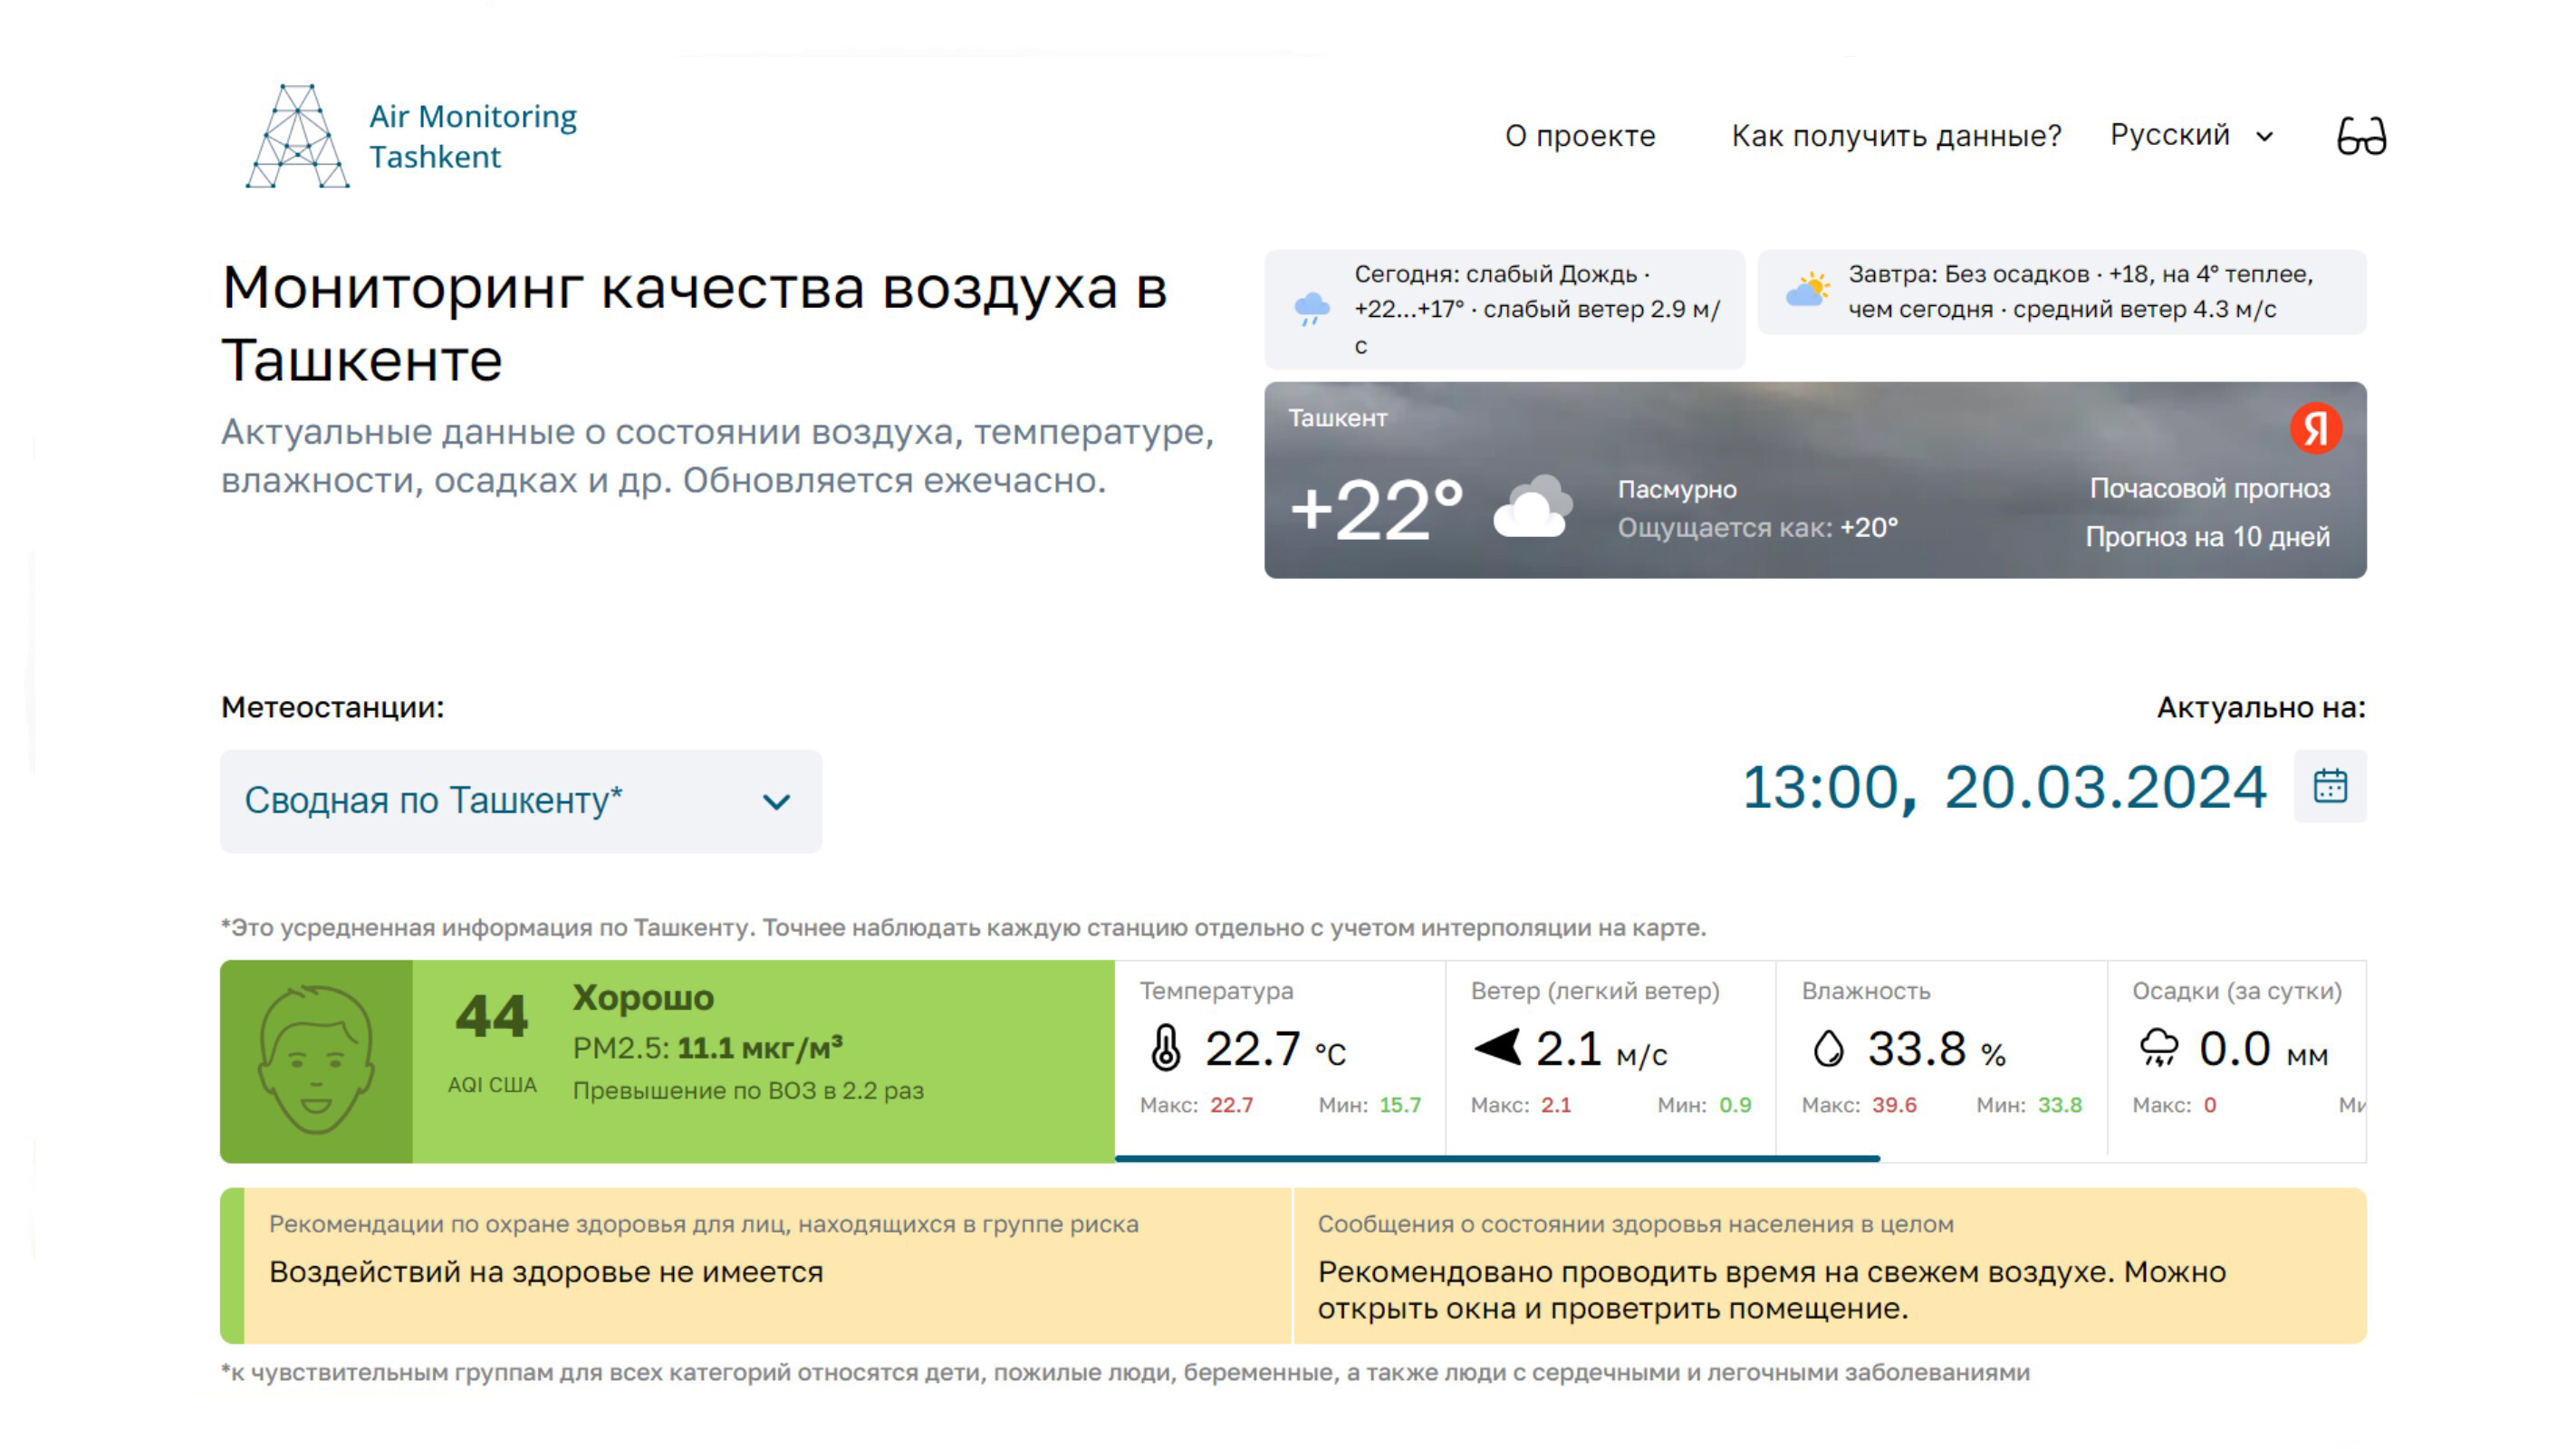 Air Monitoring Tashkent: запущен портал мониторинга качества воздуха в столице